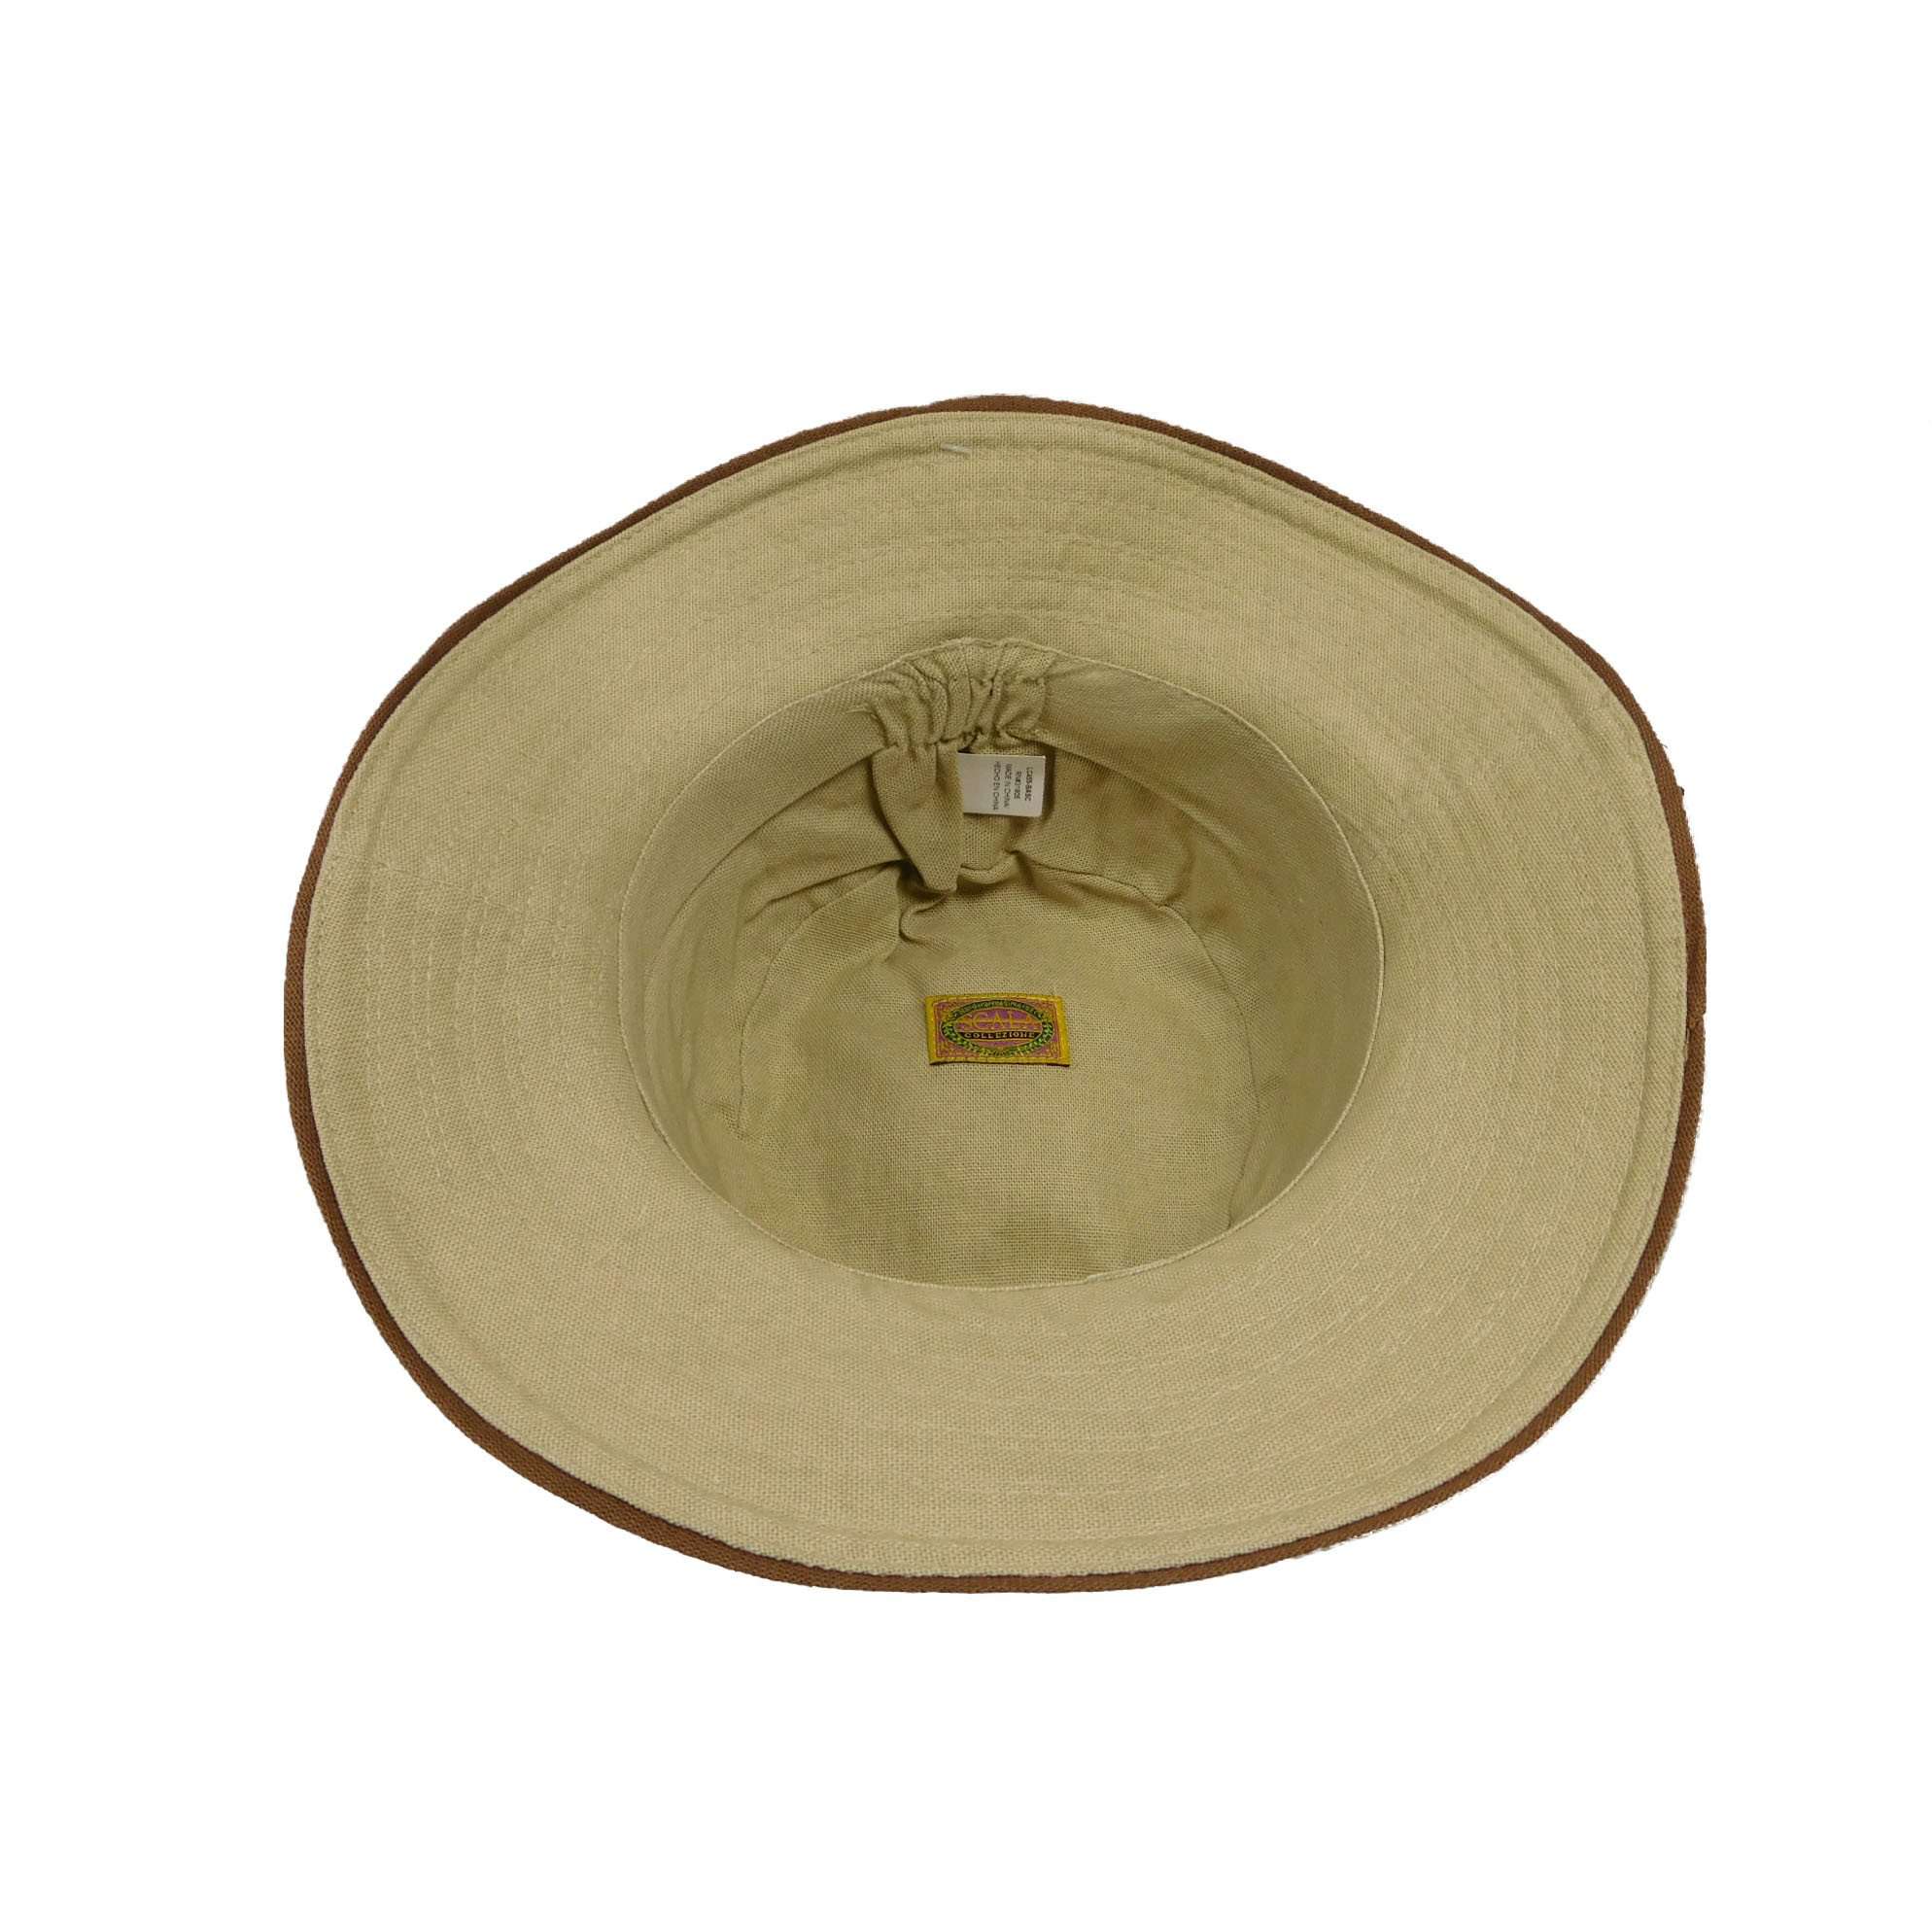 Cotton Bucket Hat with Contrast Tie - Scala Collezione Hats Navy/White / Medium (57 cm)